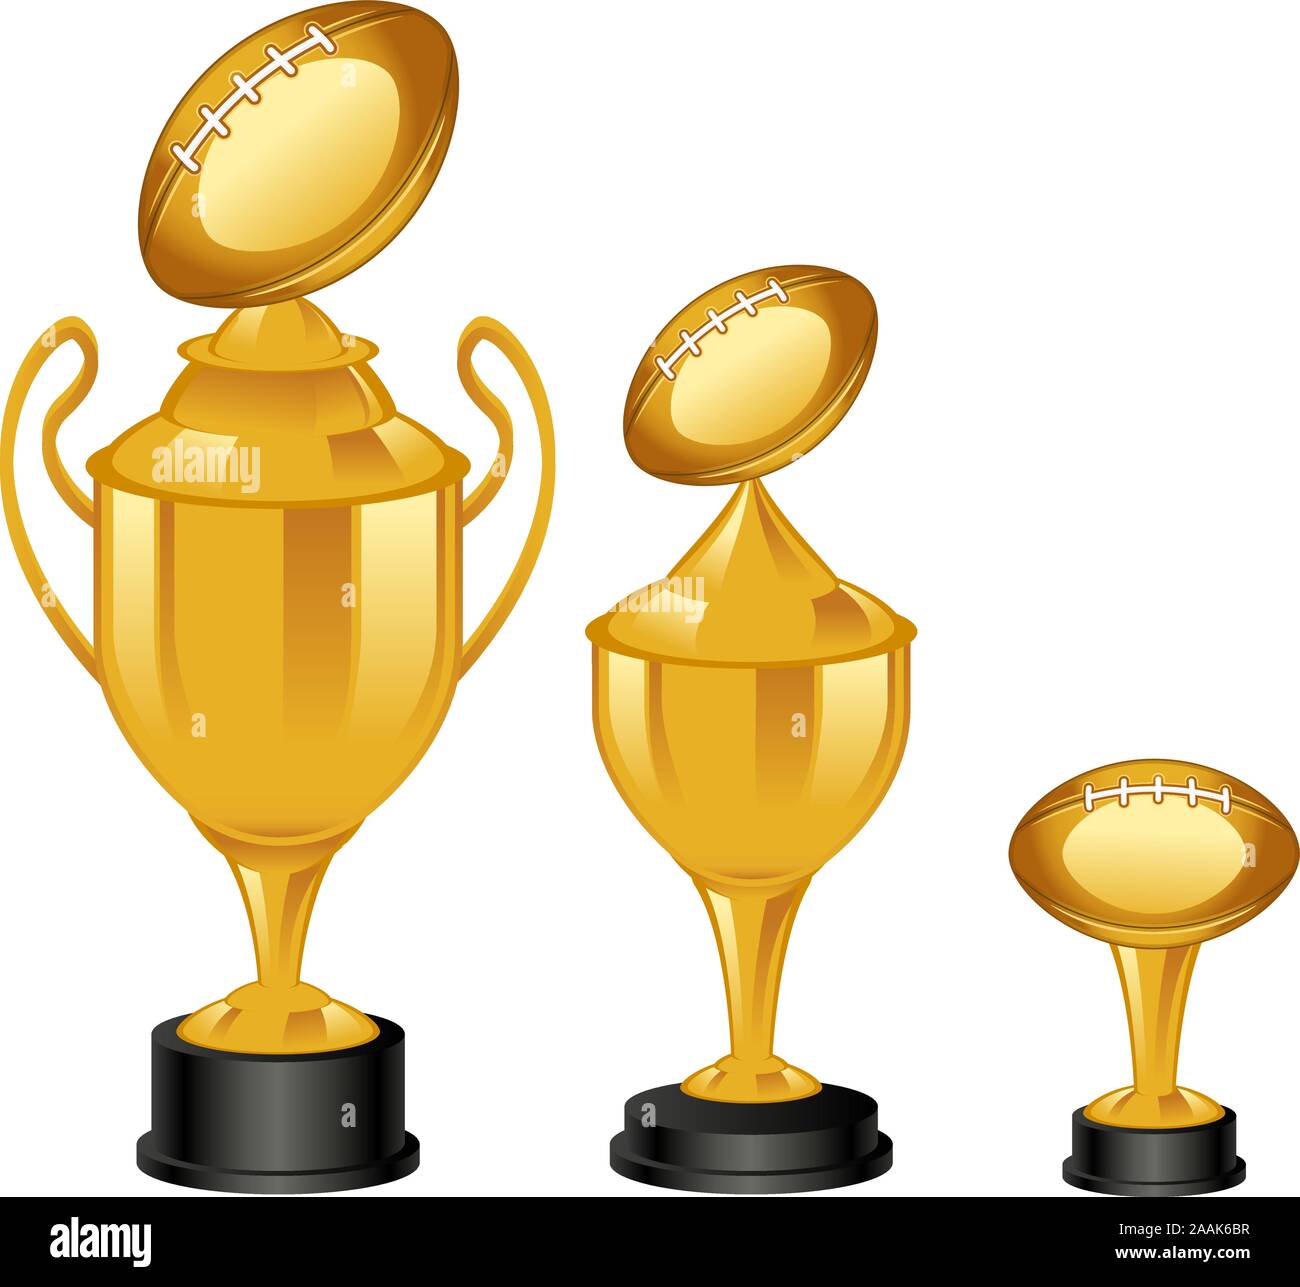 Football golden trophies illustrations Stock Vector